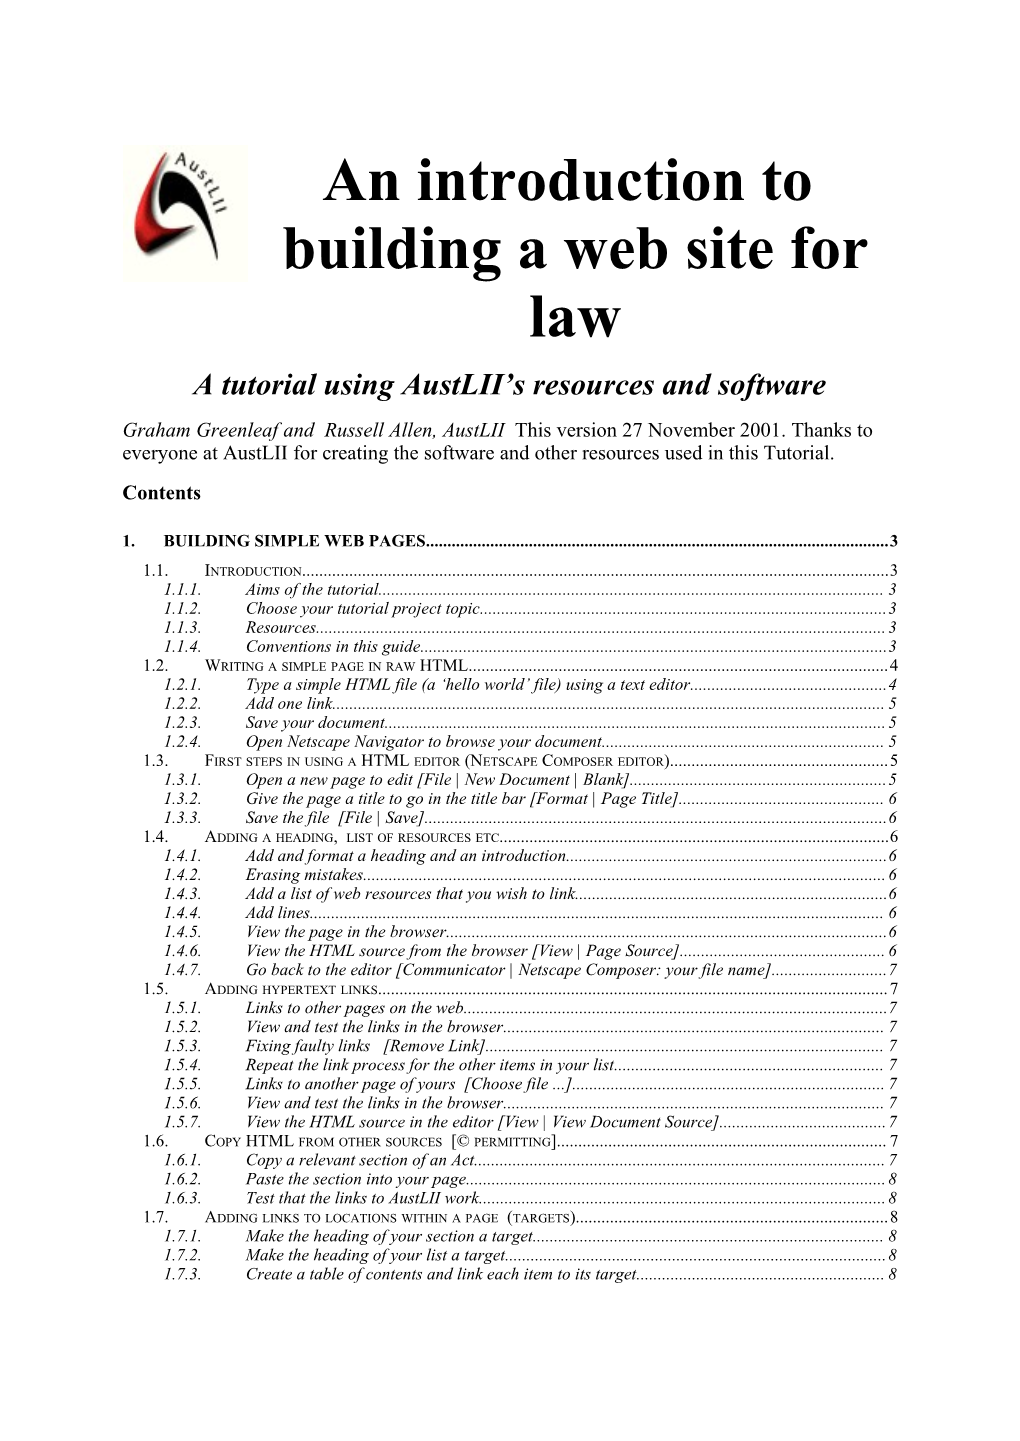 Austlii (2000) Tutorial: Building A Web Site For Law